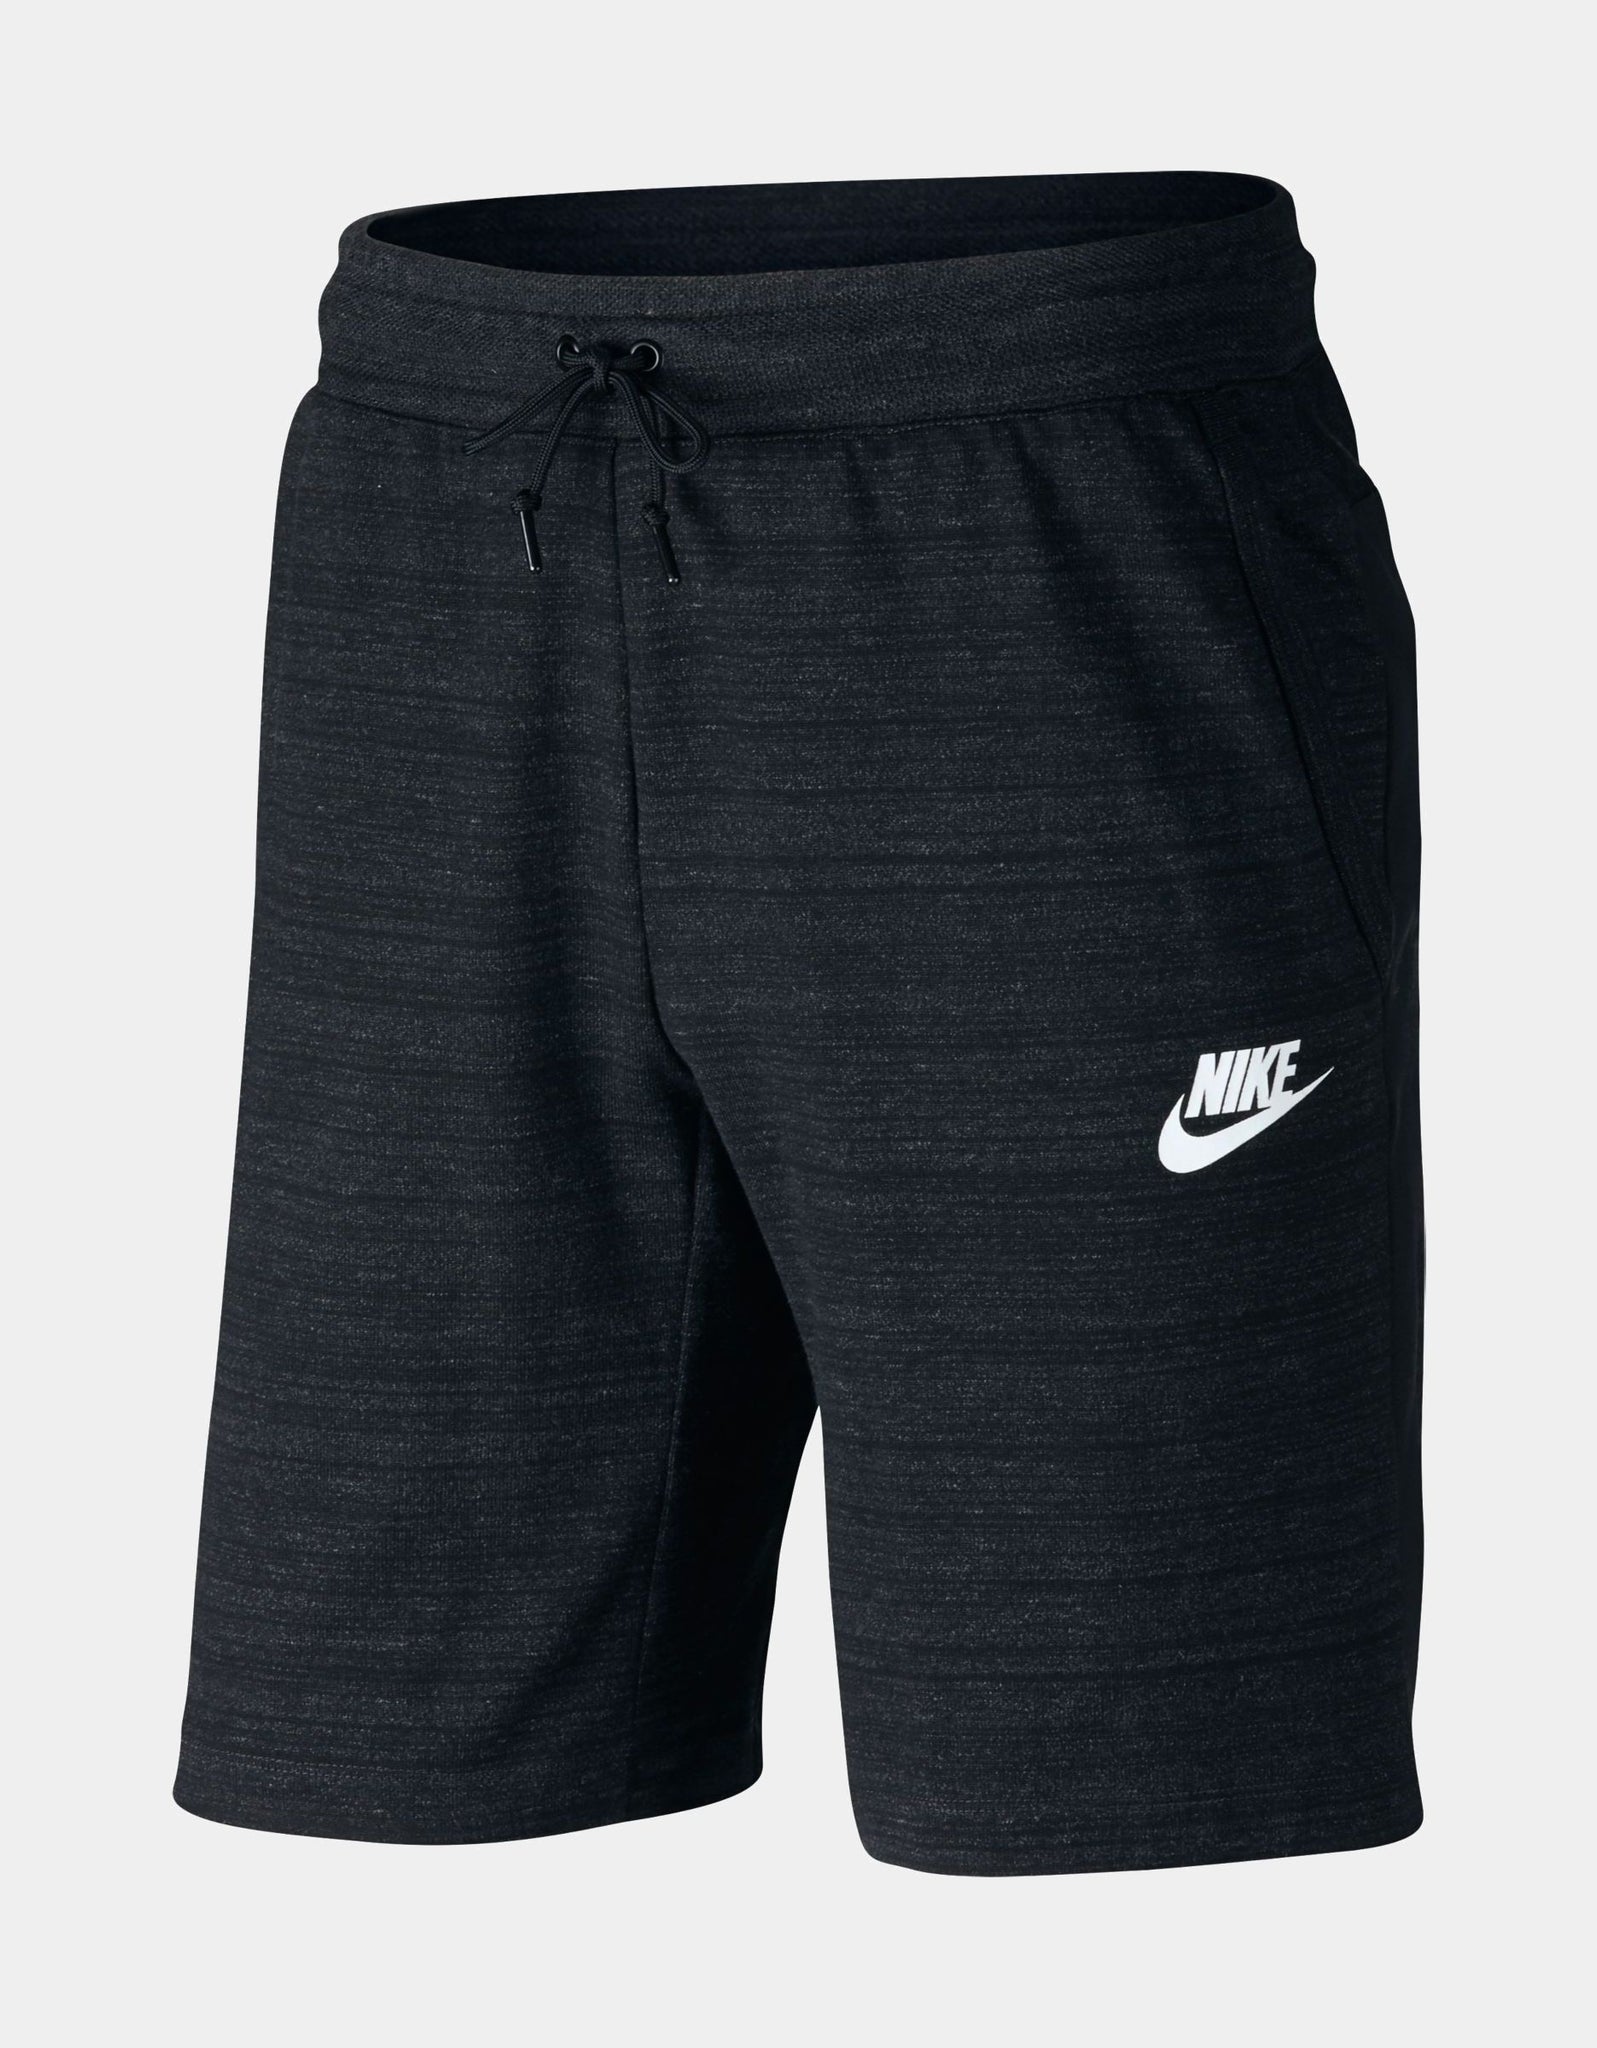 Nike Advance Mens Knit Shorts Black 885925-010 Shoe Palace